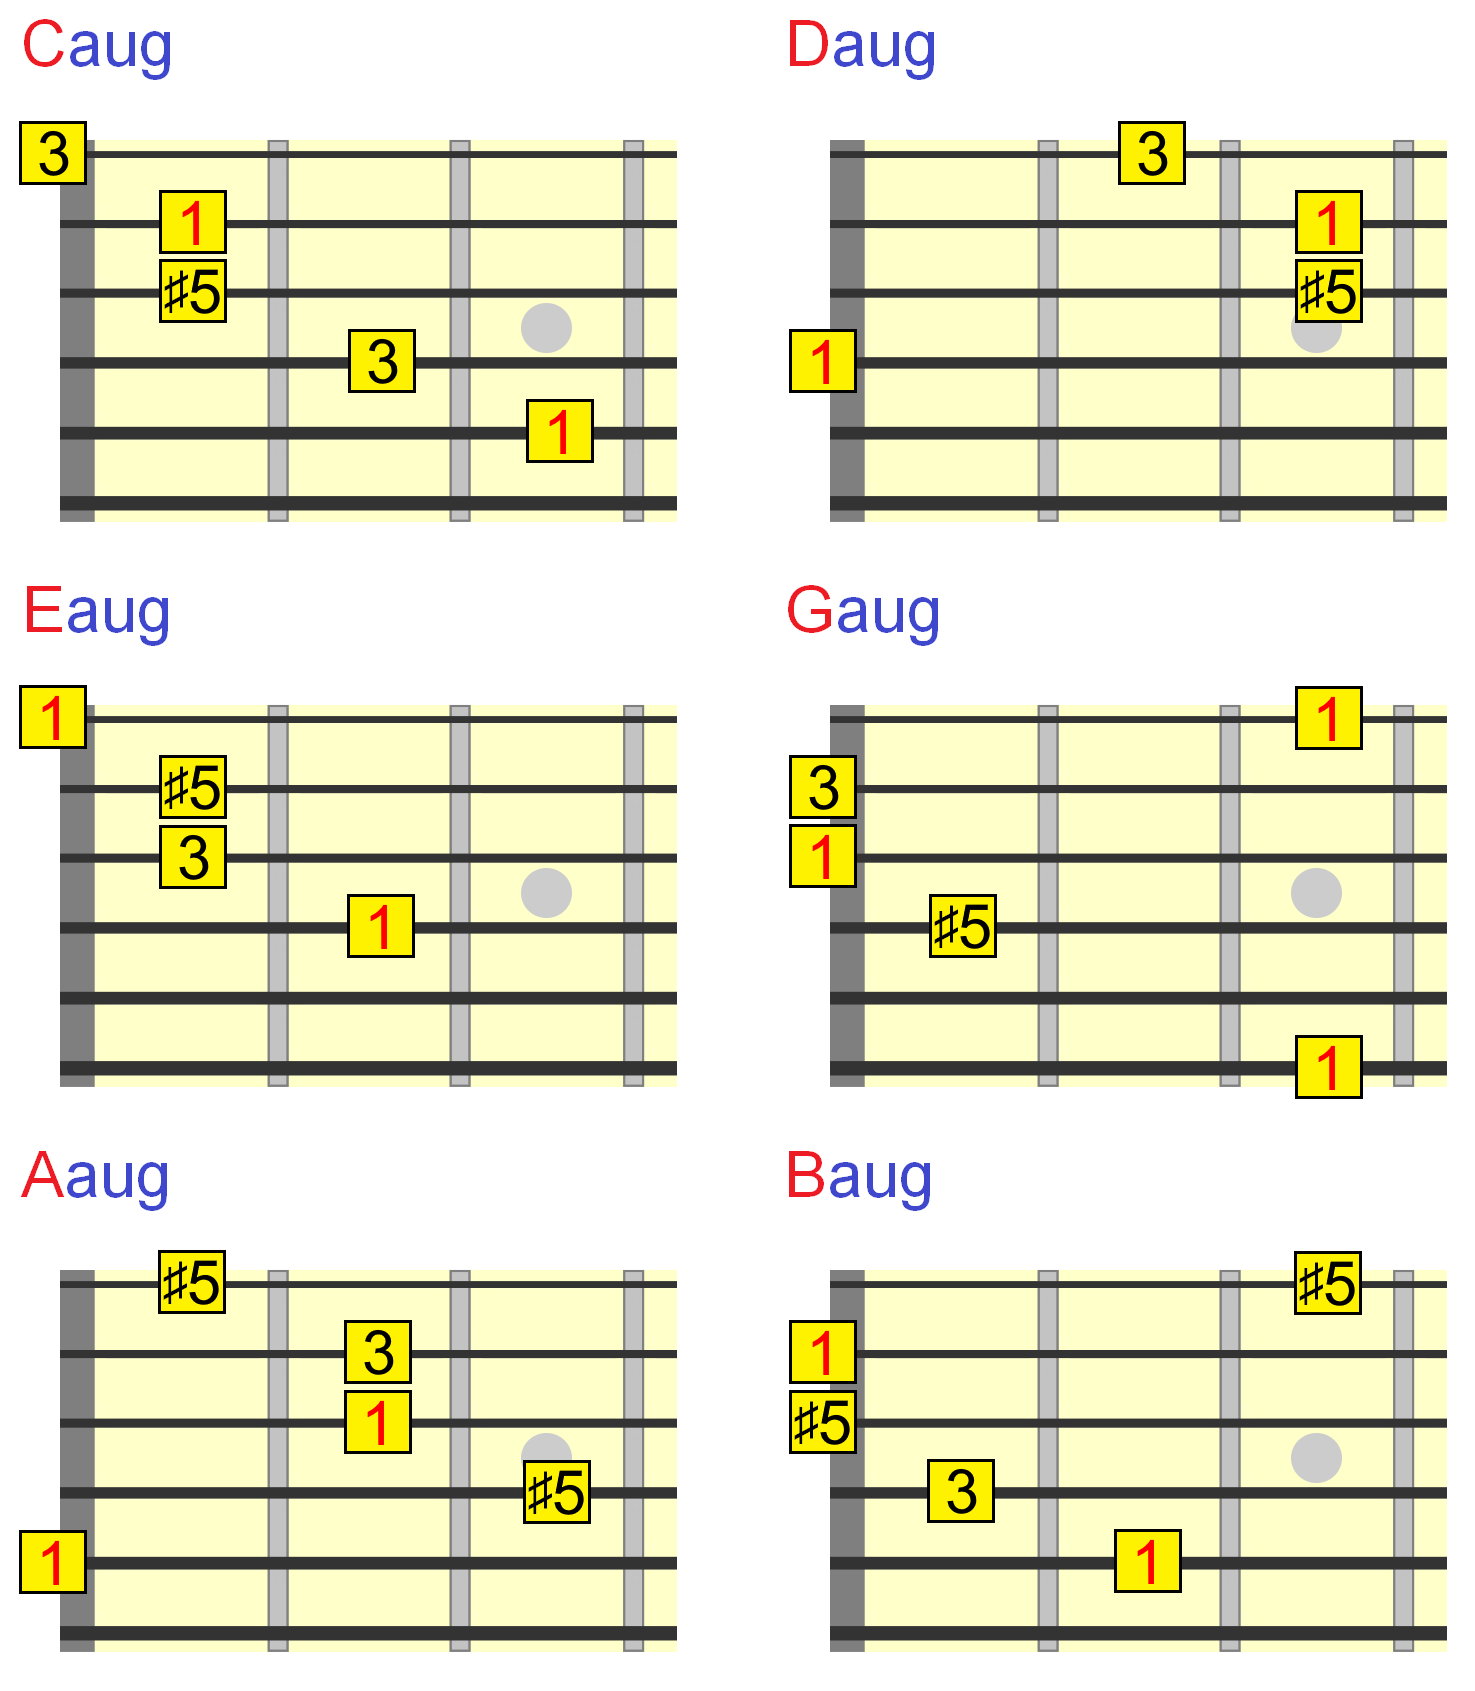 D Sharp - E Flat Major Seventh Guitar Chord Diagrams